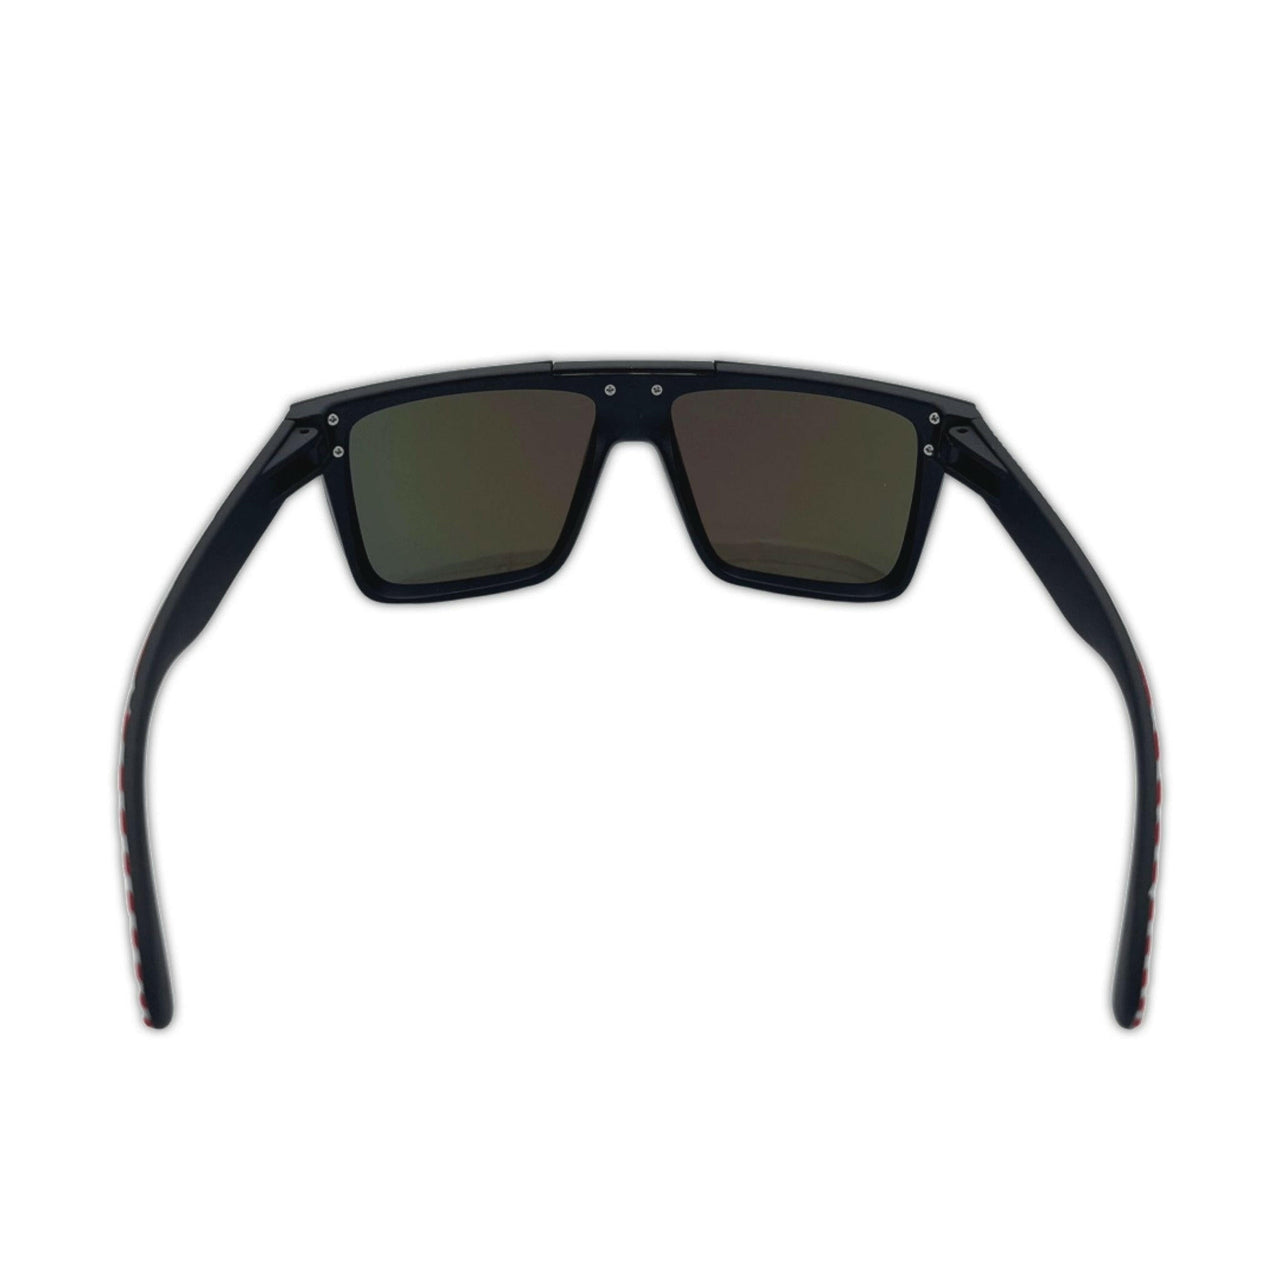 Flair USA Blue Polarized Lens Sunglasses - Rebel Reaper Clothing Company Sunglasses